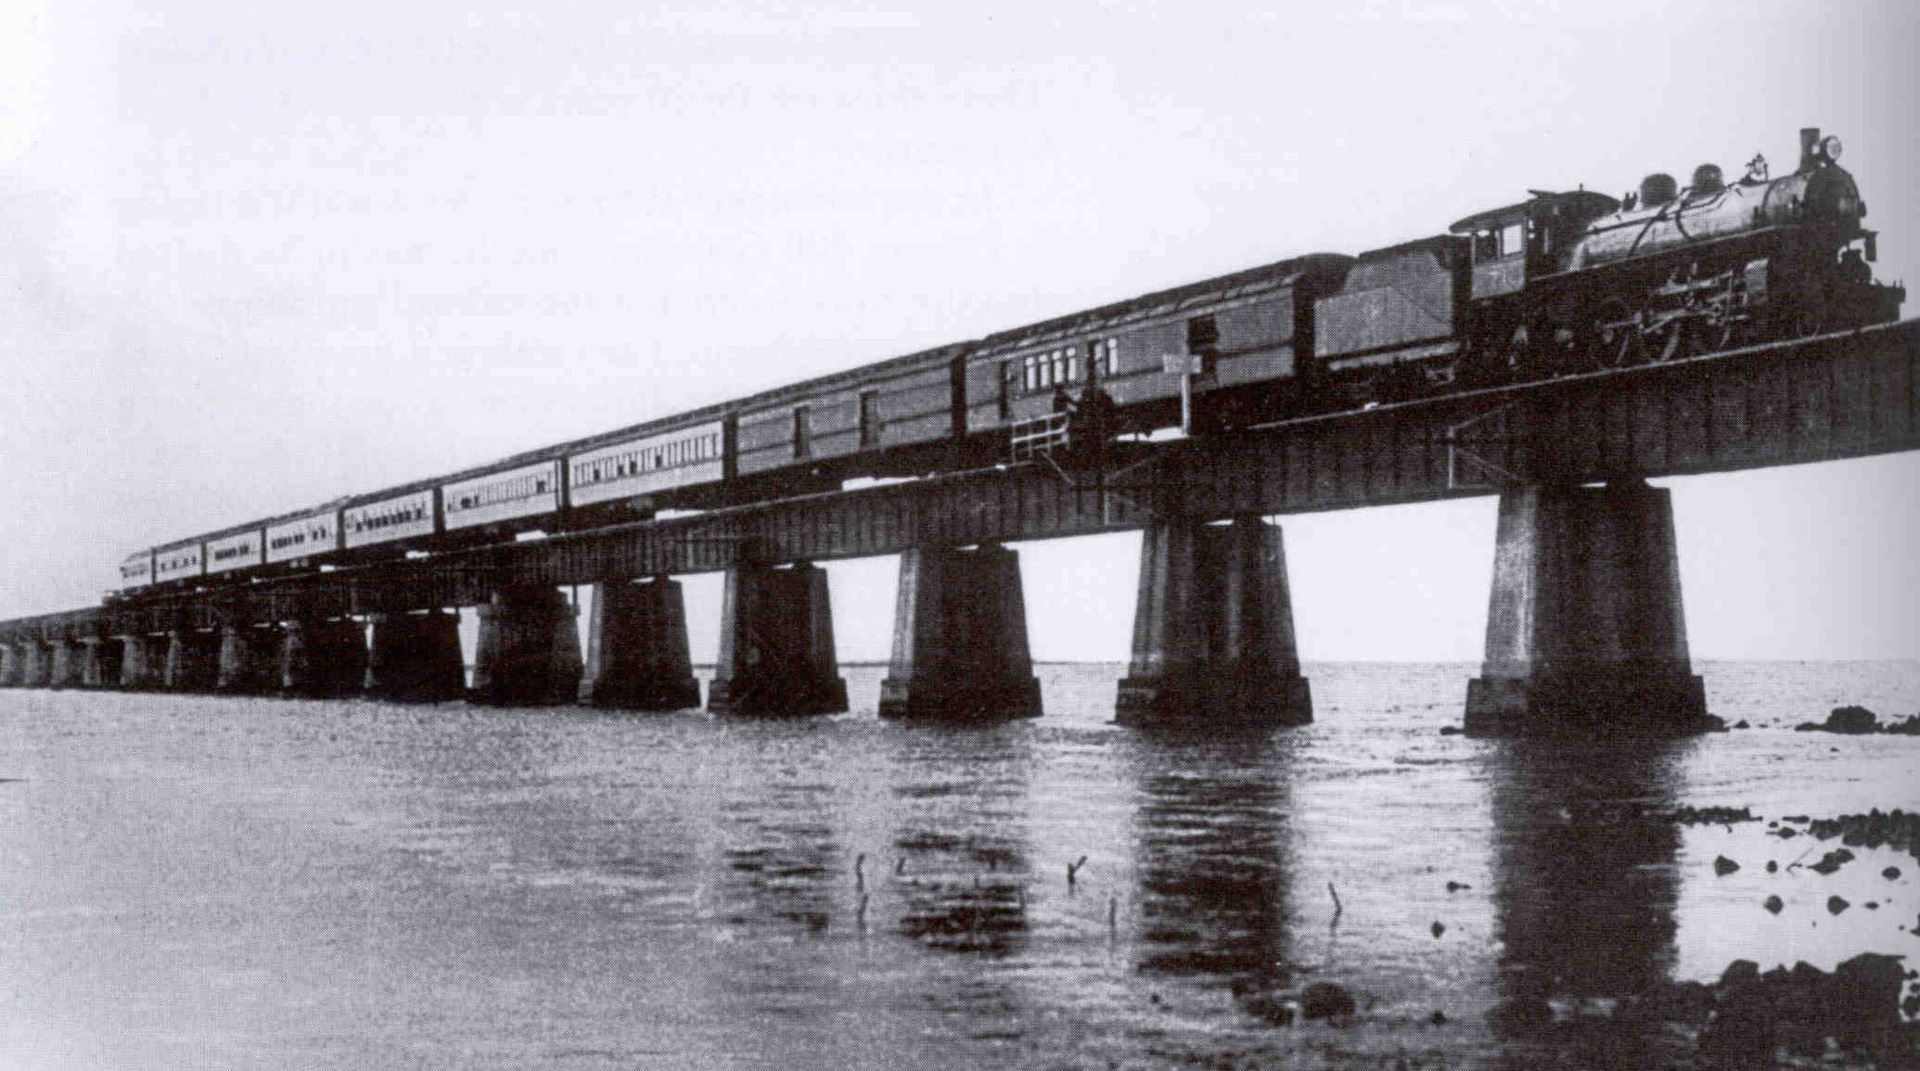 Flagler's Railway Train